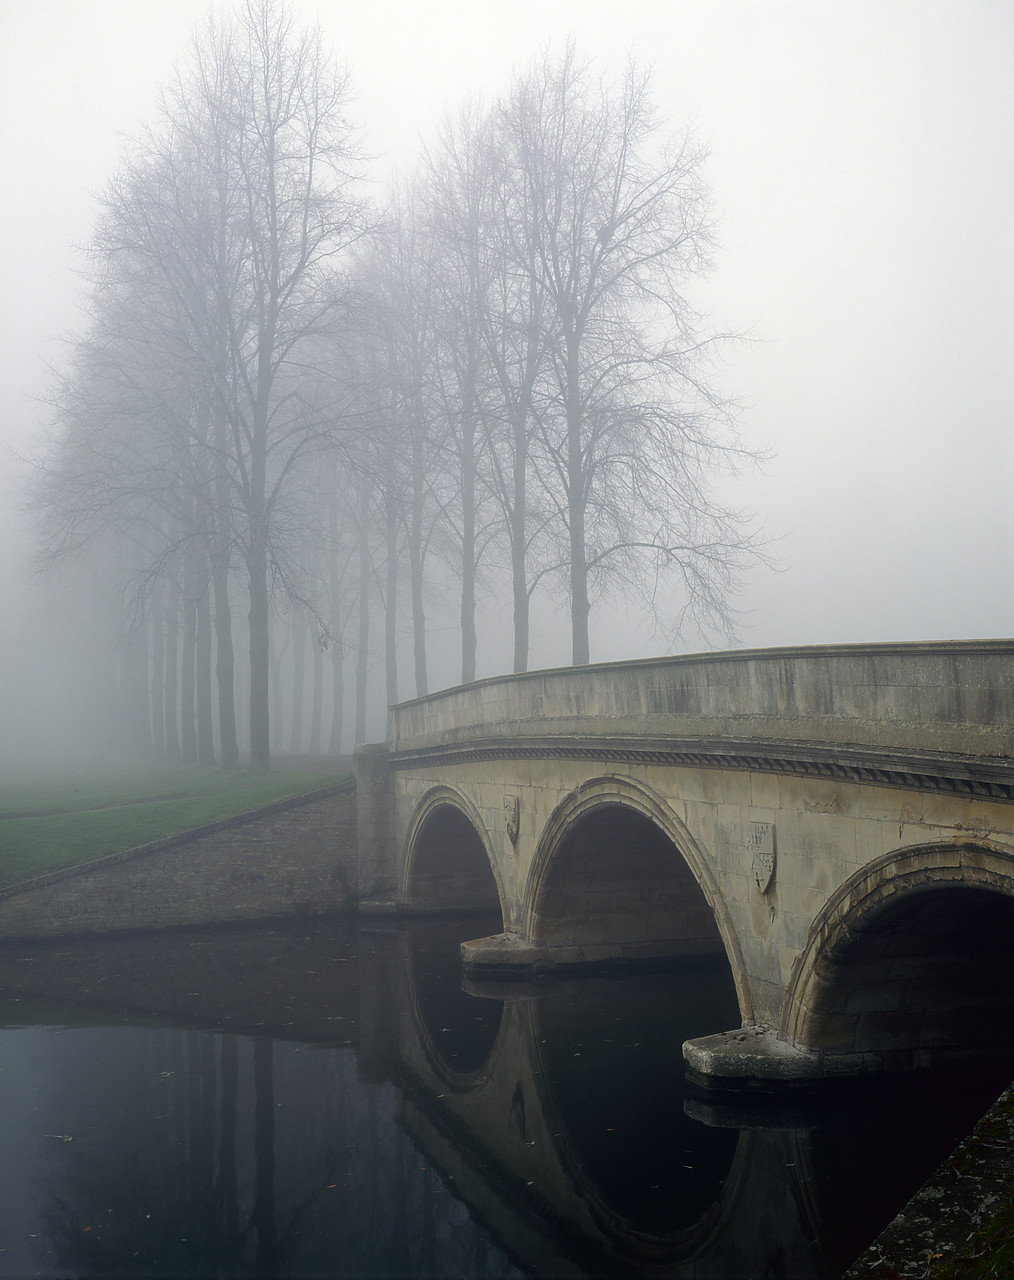 #881792-1 - Bridge & Poplars in Fog, Cambridge, Cambridgeshire, England